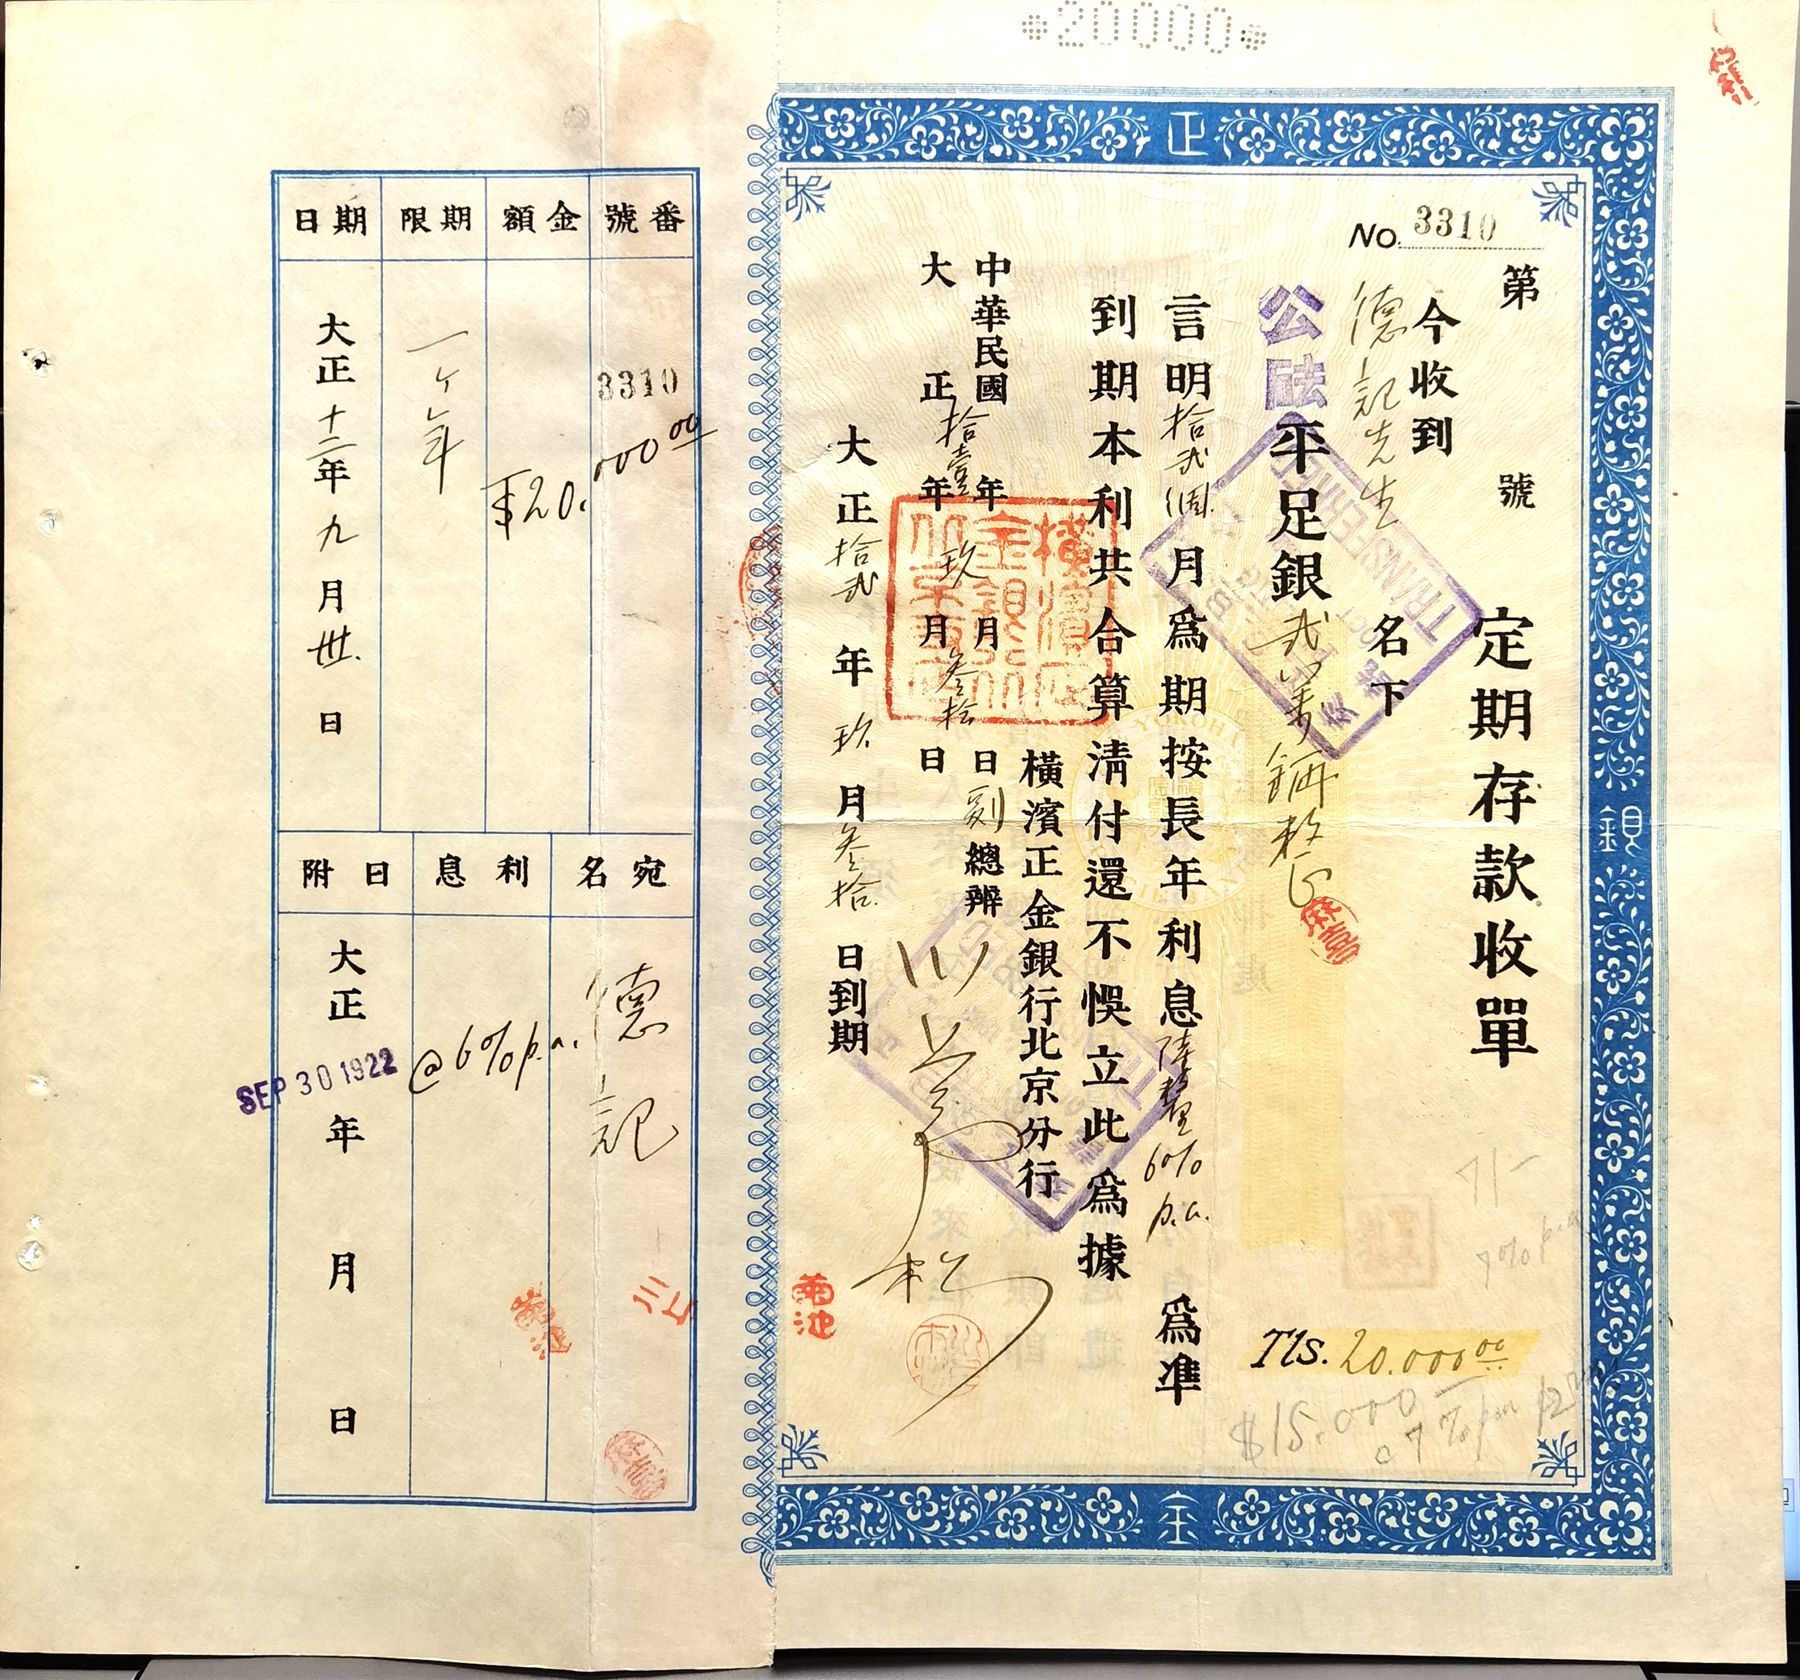 D3006, Fixed Deposit Receipt of Yokohama Special Bank, 1912 Beijing, China